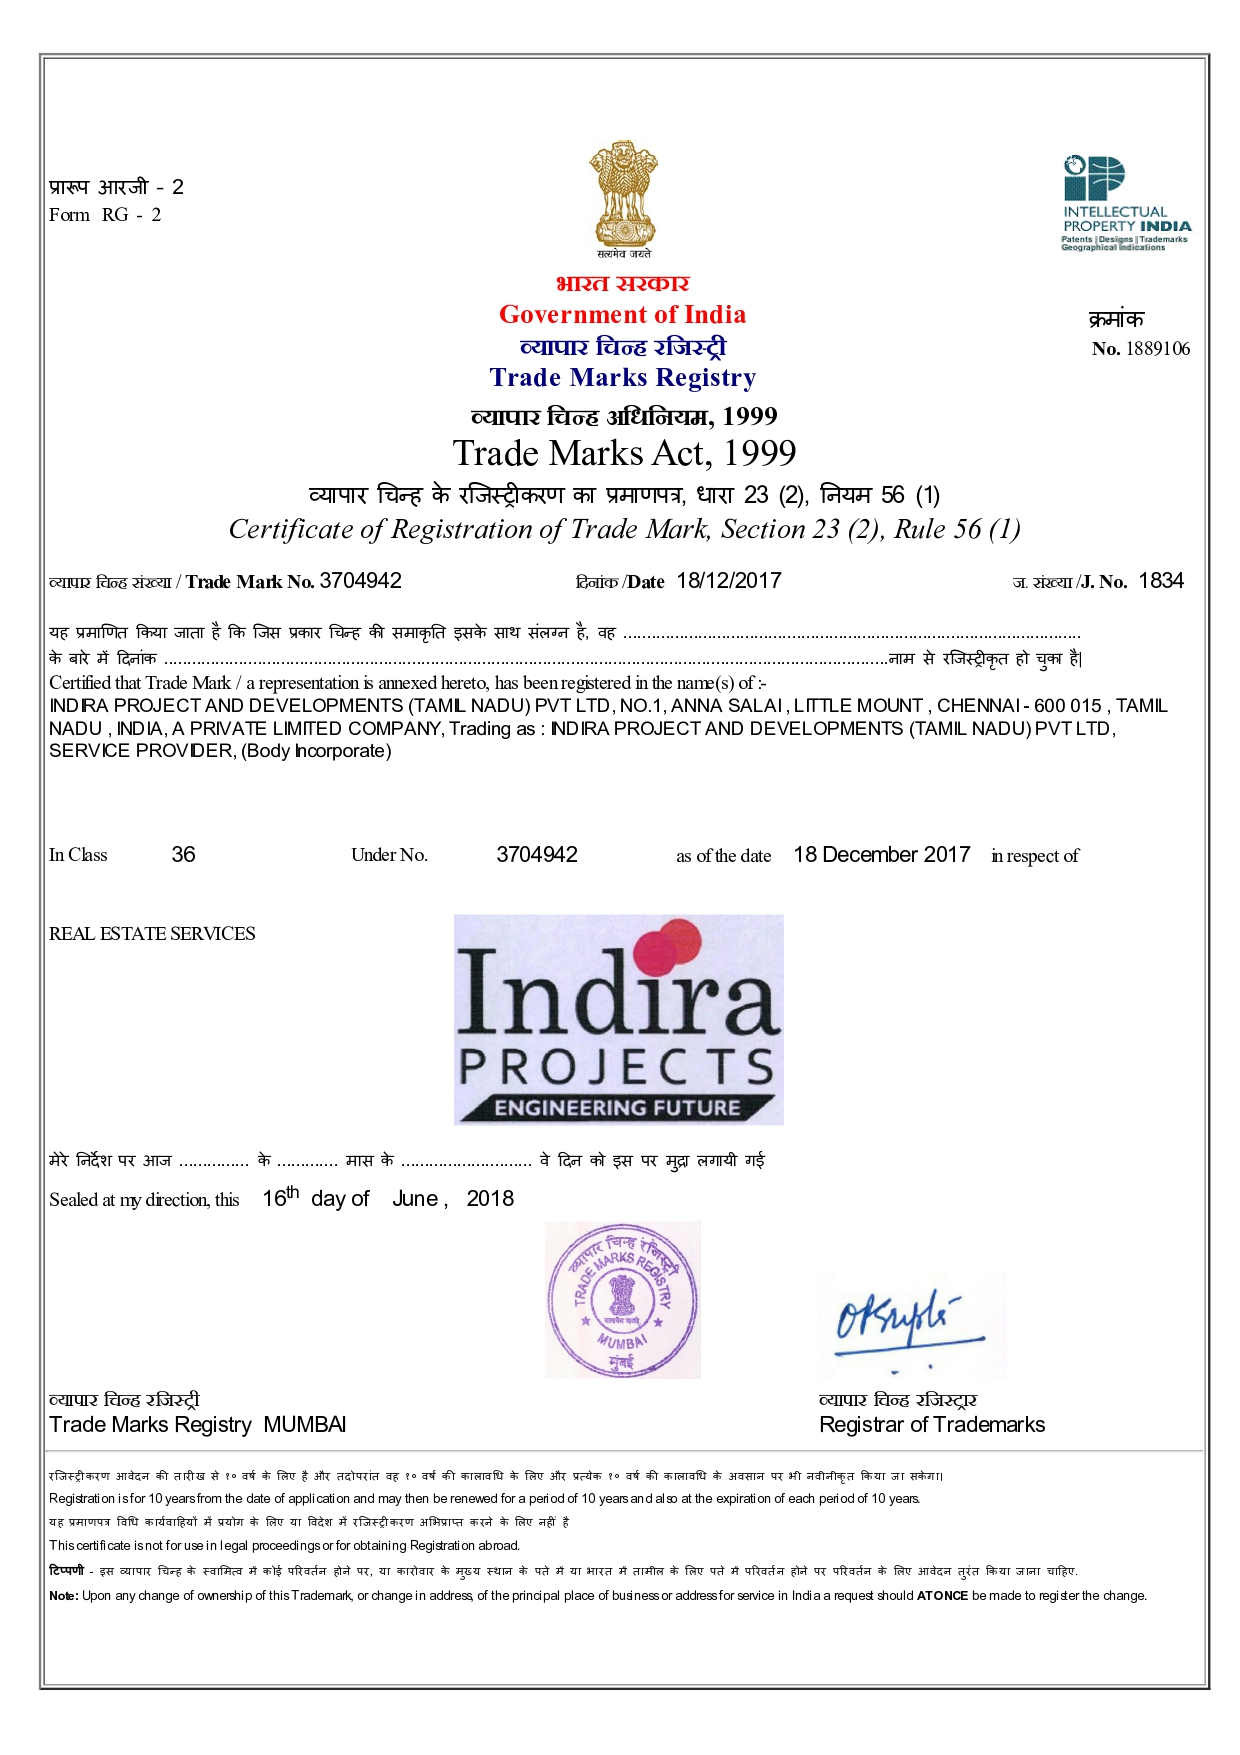 Trademark Registration certificate sample1